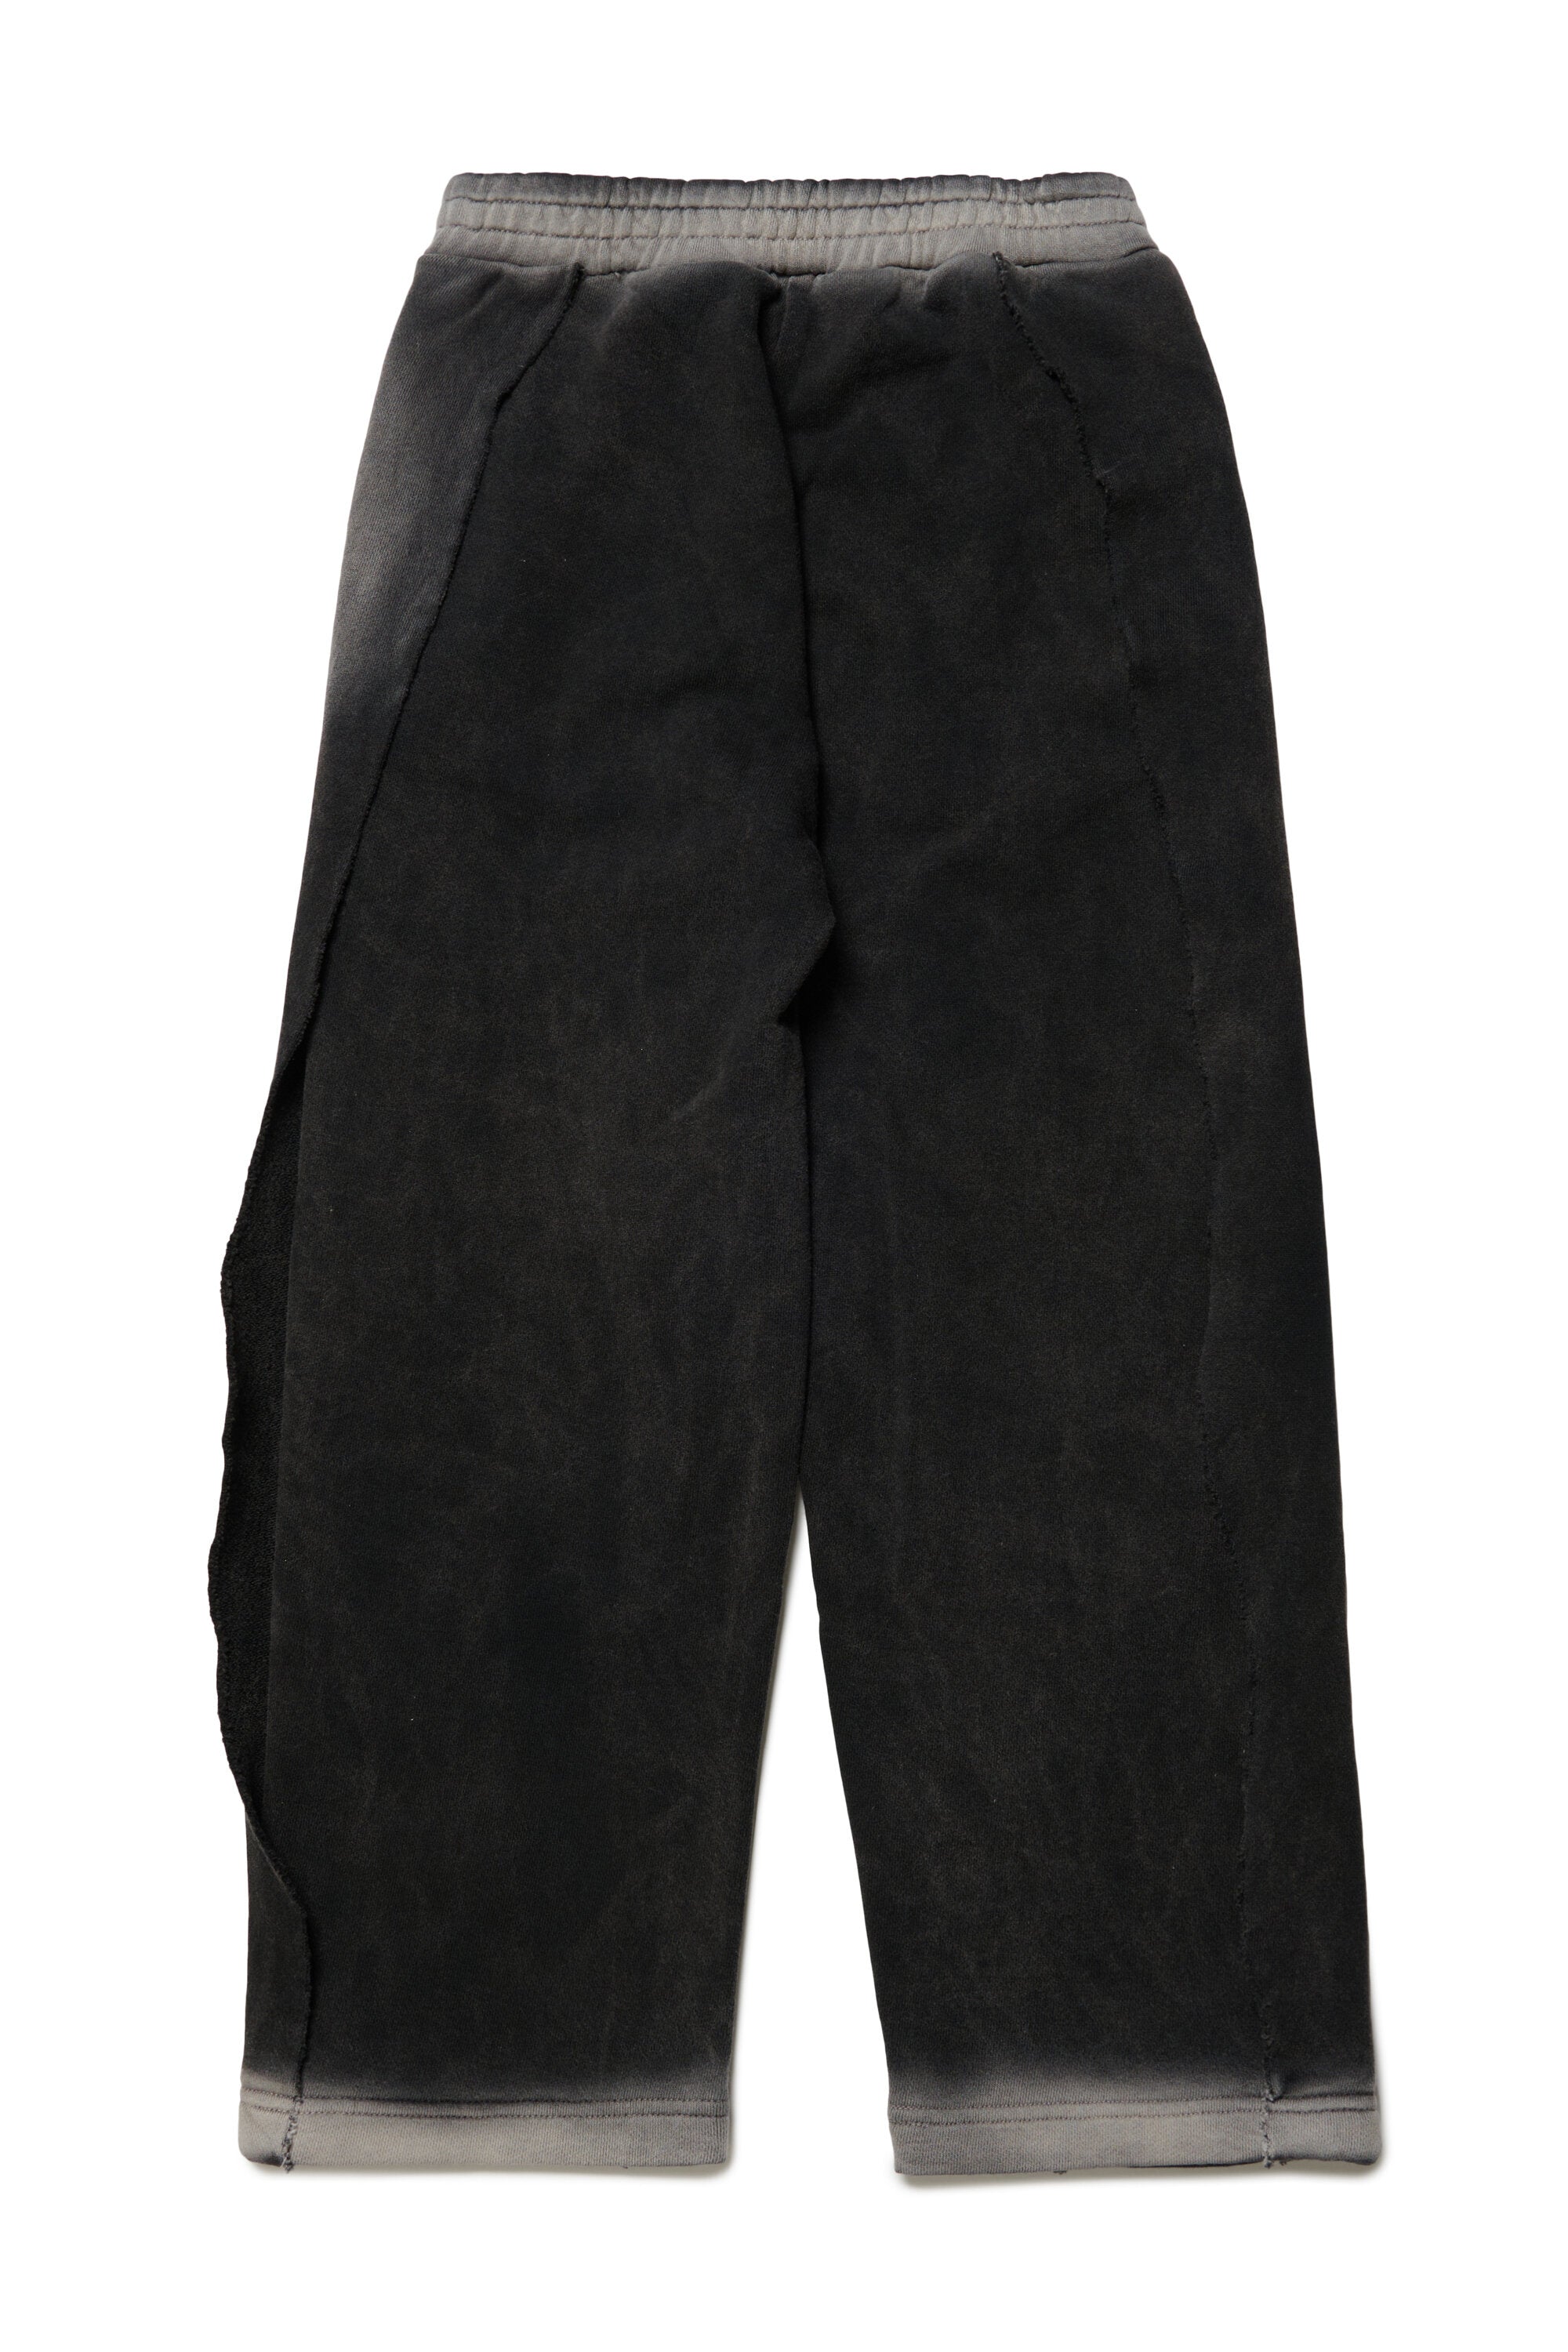 Pantalones con marca en chándal  de doble capa